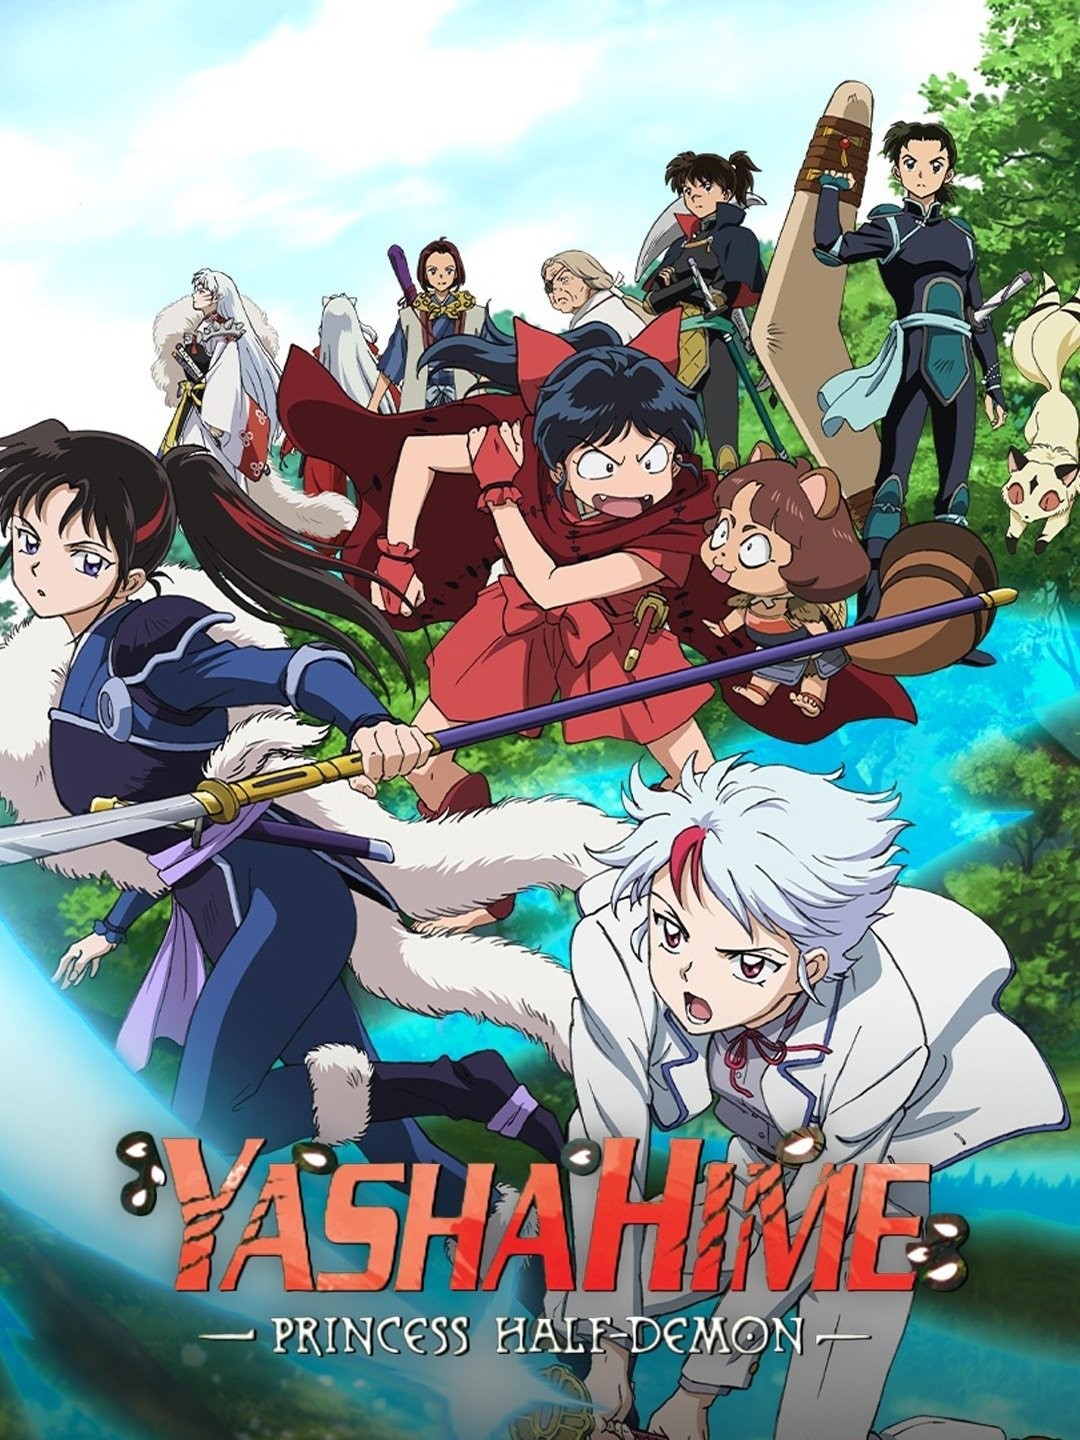 Yashahime Season 2 Episode 15 Release Date